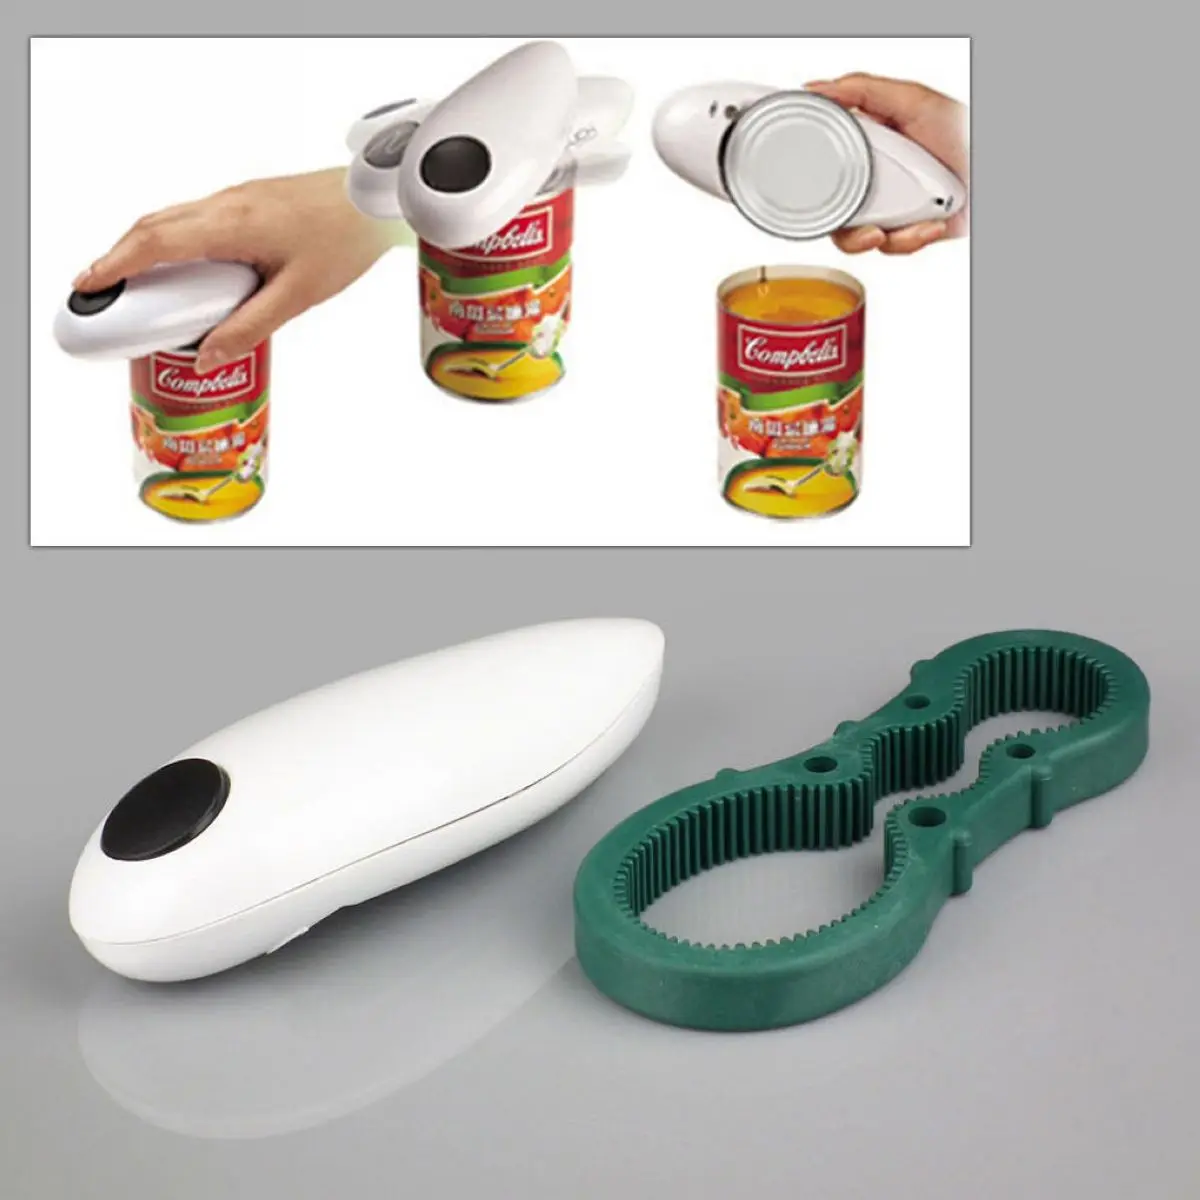 https://ae01.alicdn.com/kf/HLB1FyV7aVzsK1Rjy1Xbq6xOaFXap/Electric-Automatic-One-Touch-Hand-Held-Can-Jar-Tin-Opener-Tools-Kitchen-Gadget-Jar-opener.jpg